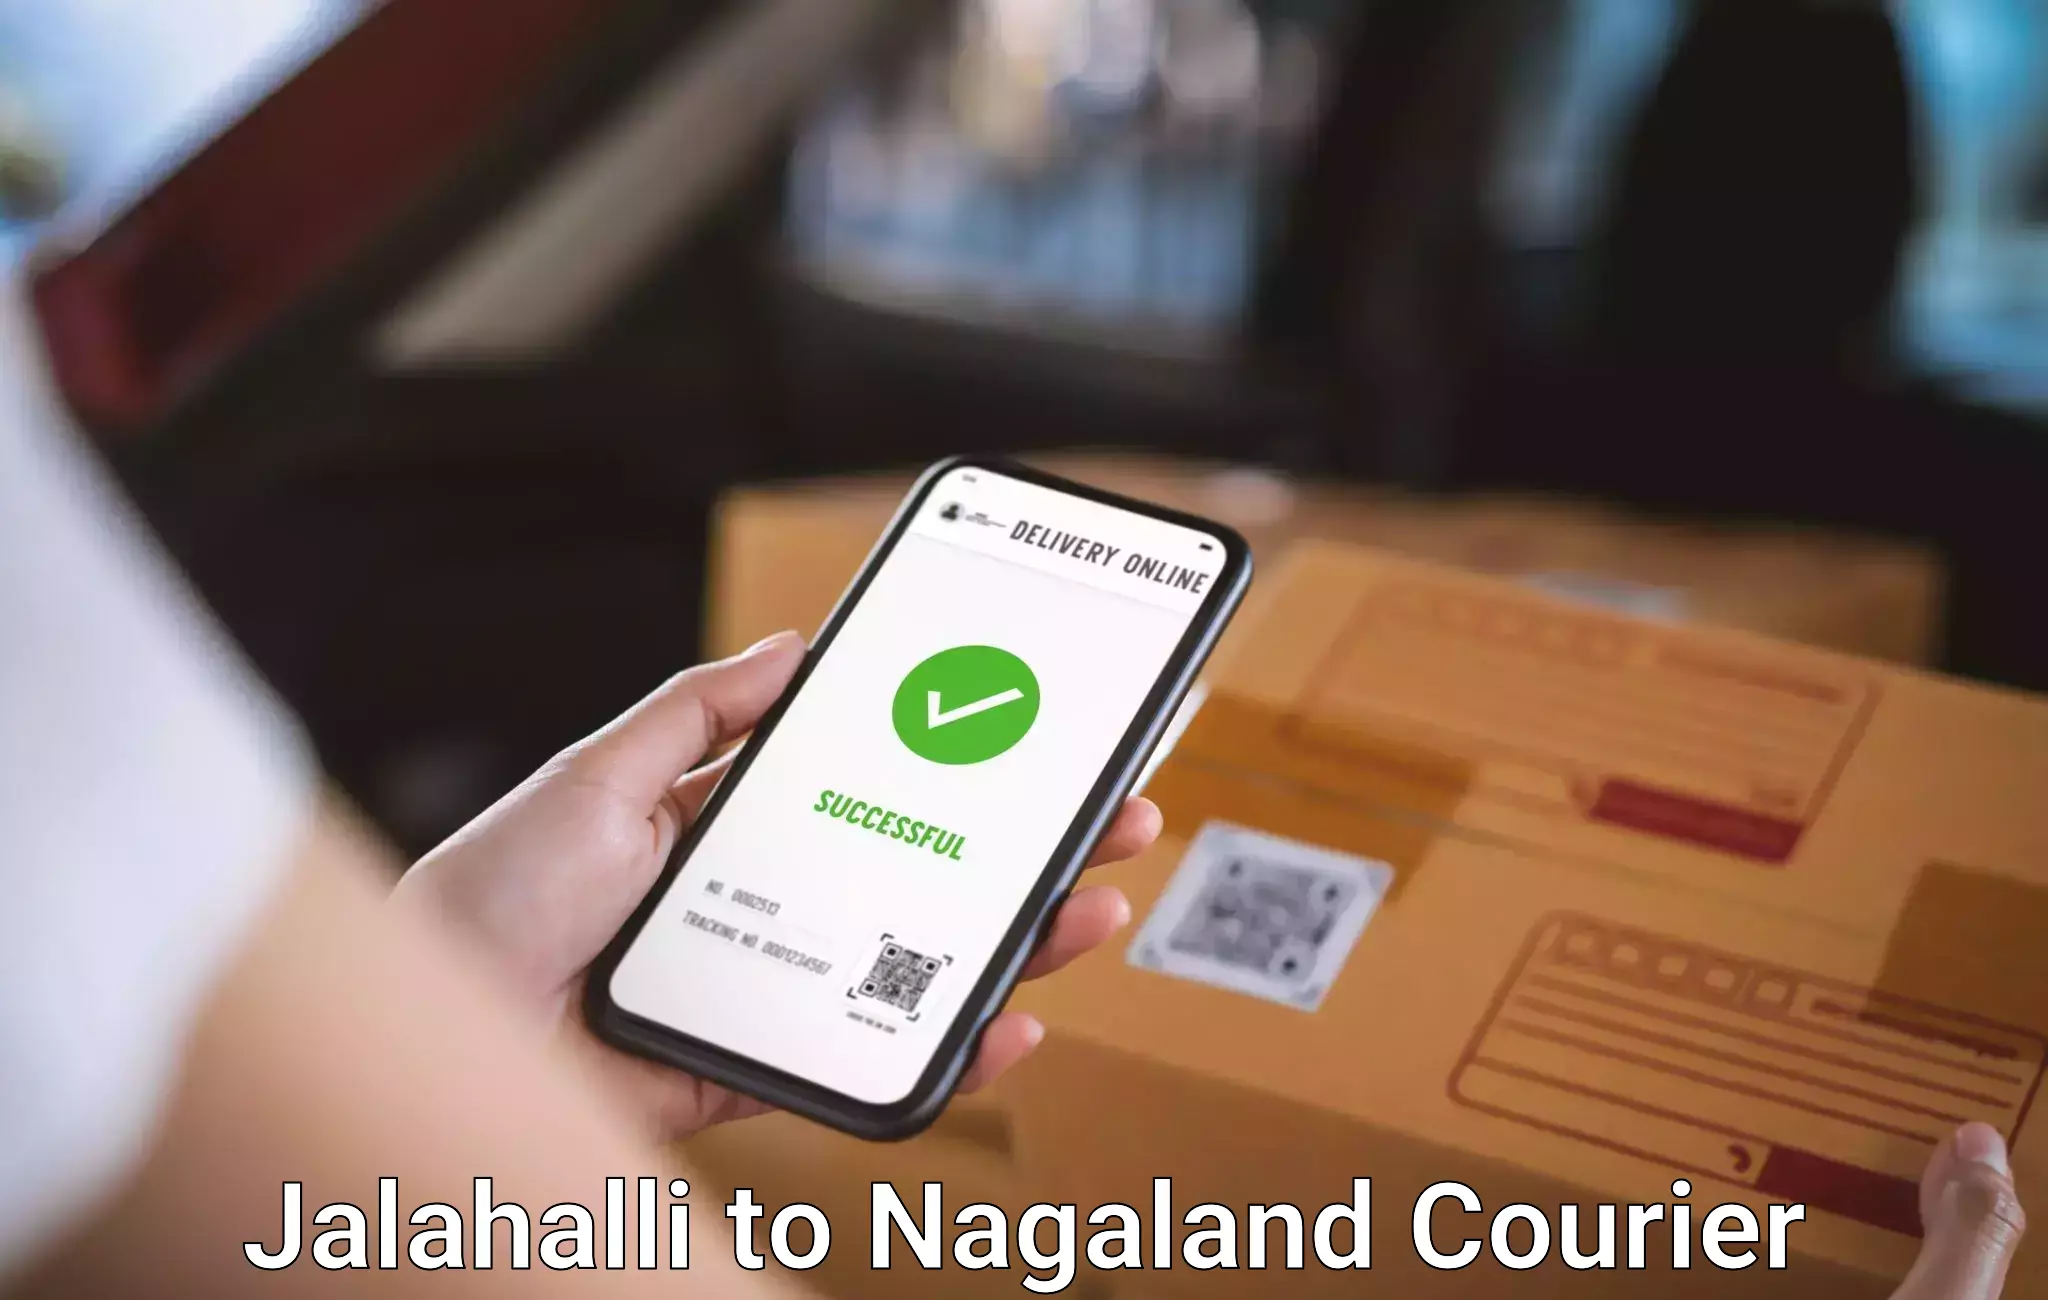 Luggage transport consultancy Jalahalli to Nagaland